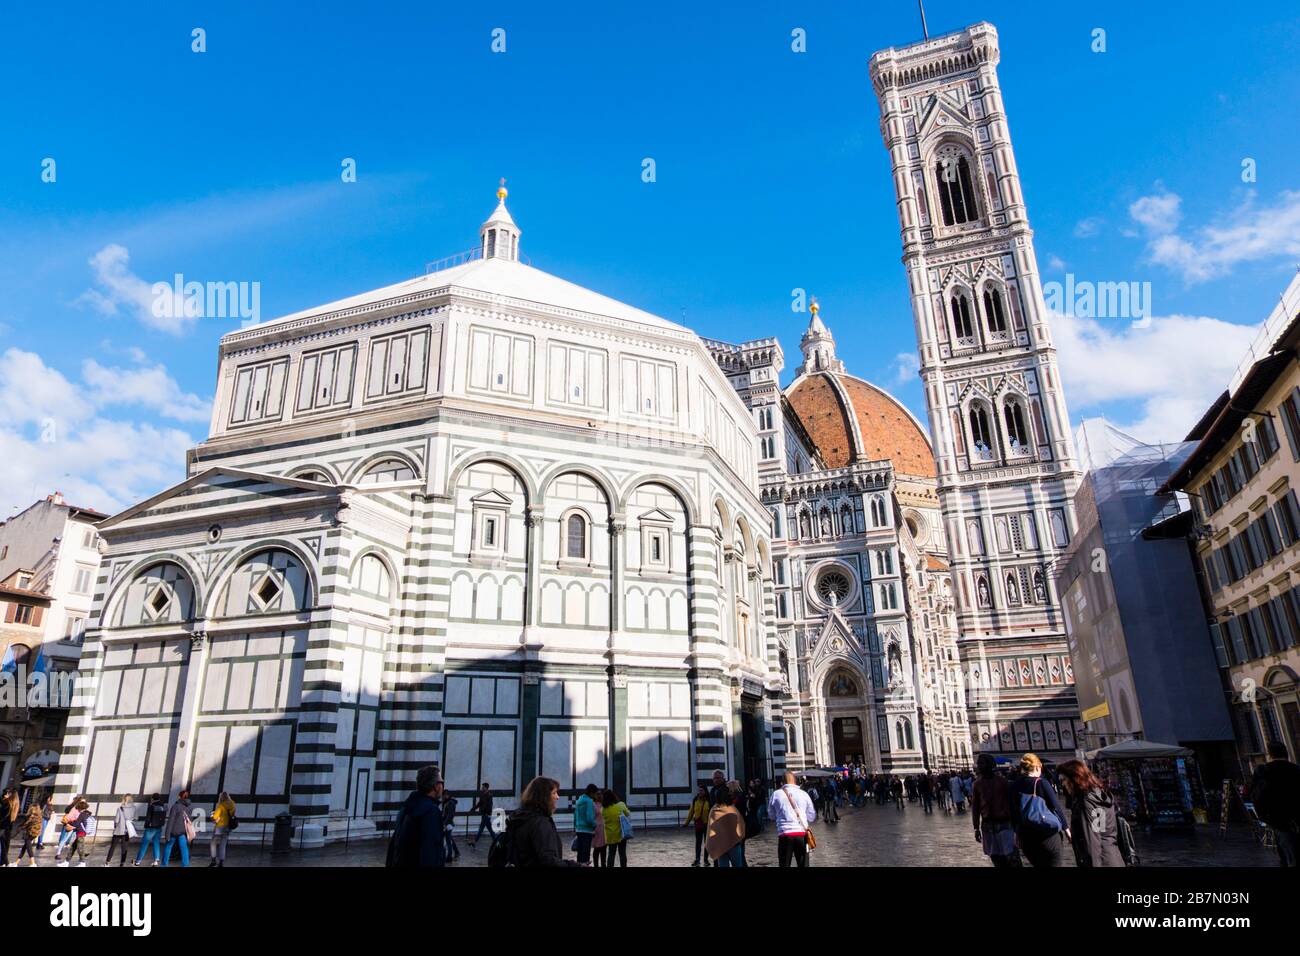 Cattedrale di Santa Maria del Fiore, Cathedral of Florence, Piazza del Duomo, Florence, Italy Stock Photo